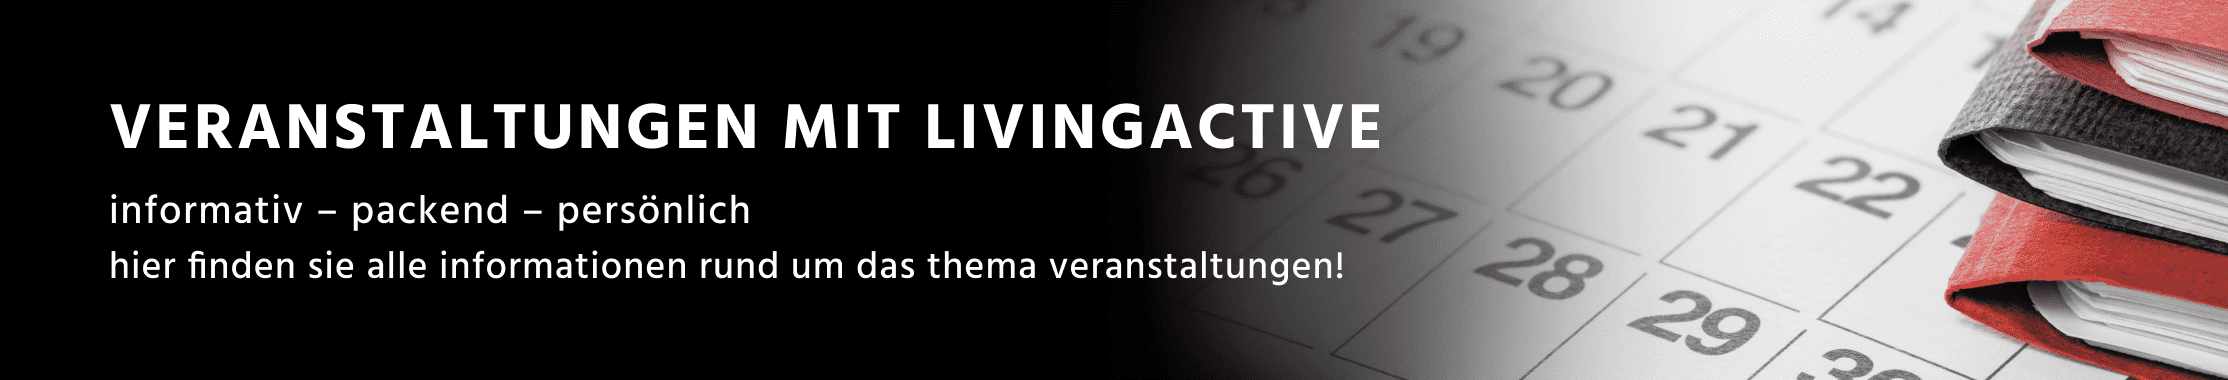 Veranstaltungen mit LivingActive